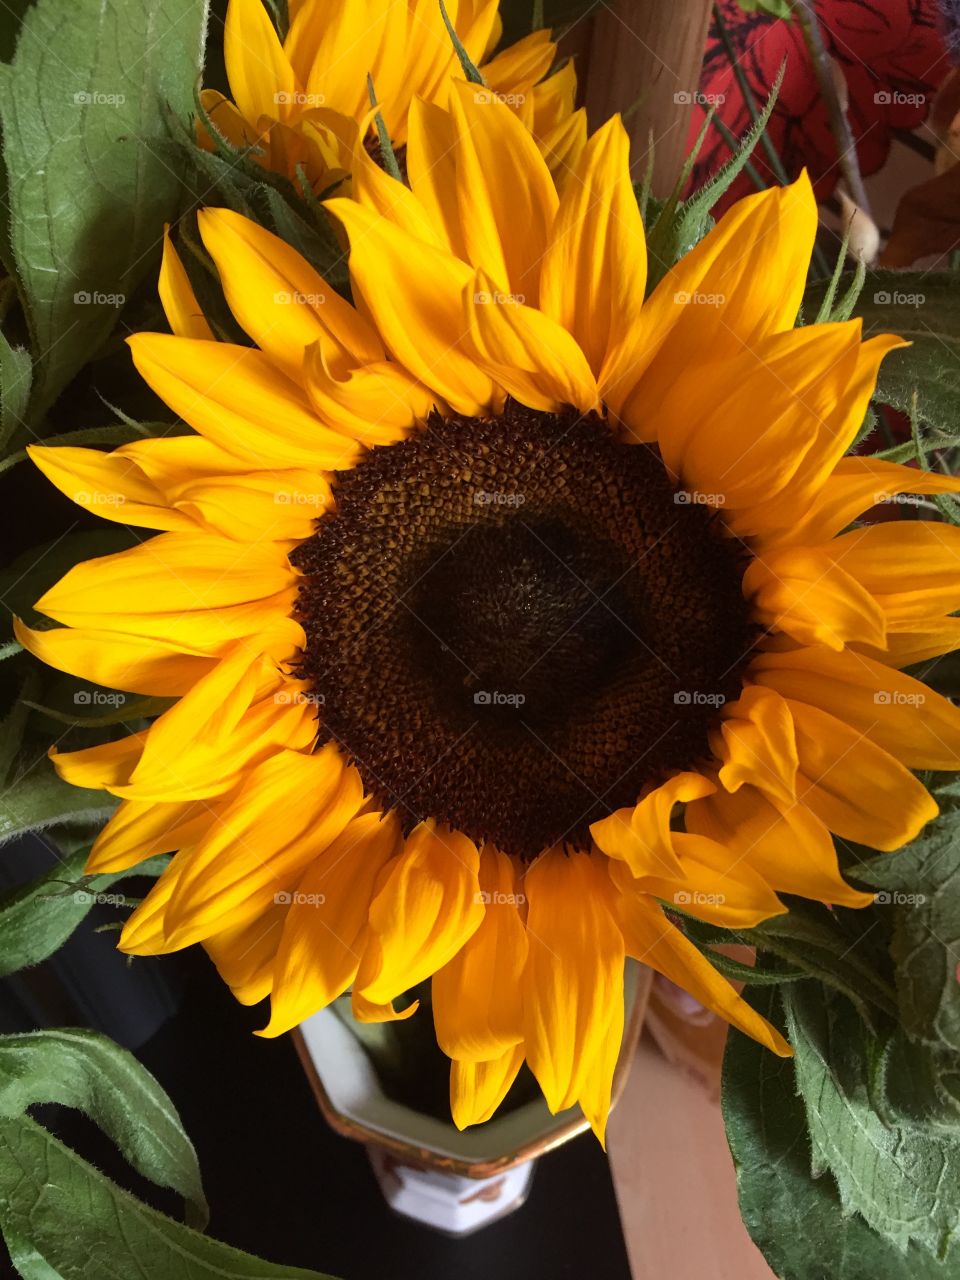 Sunflower close up 